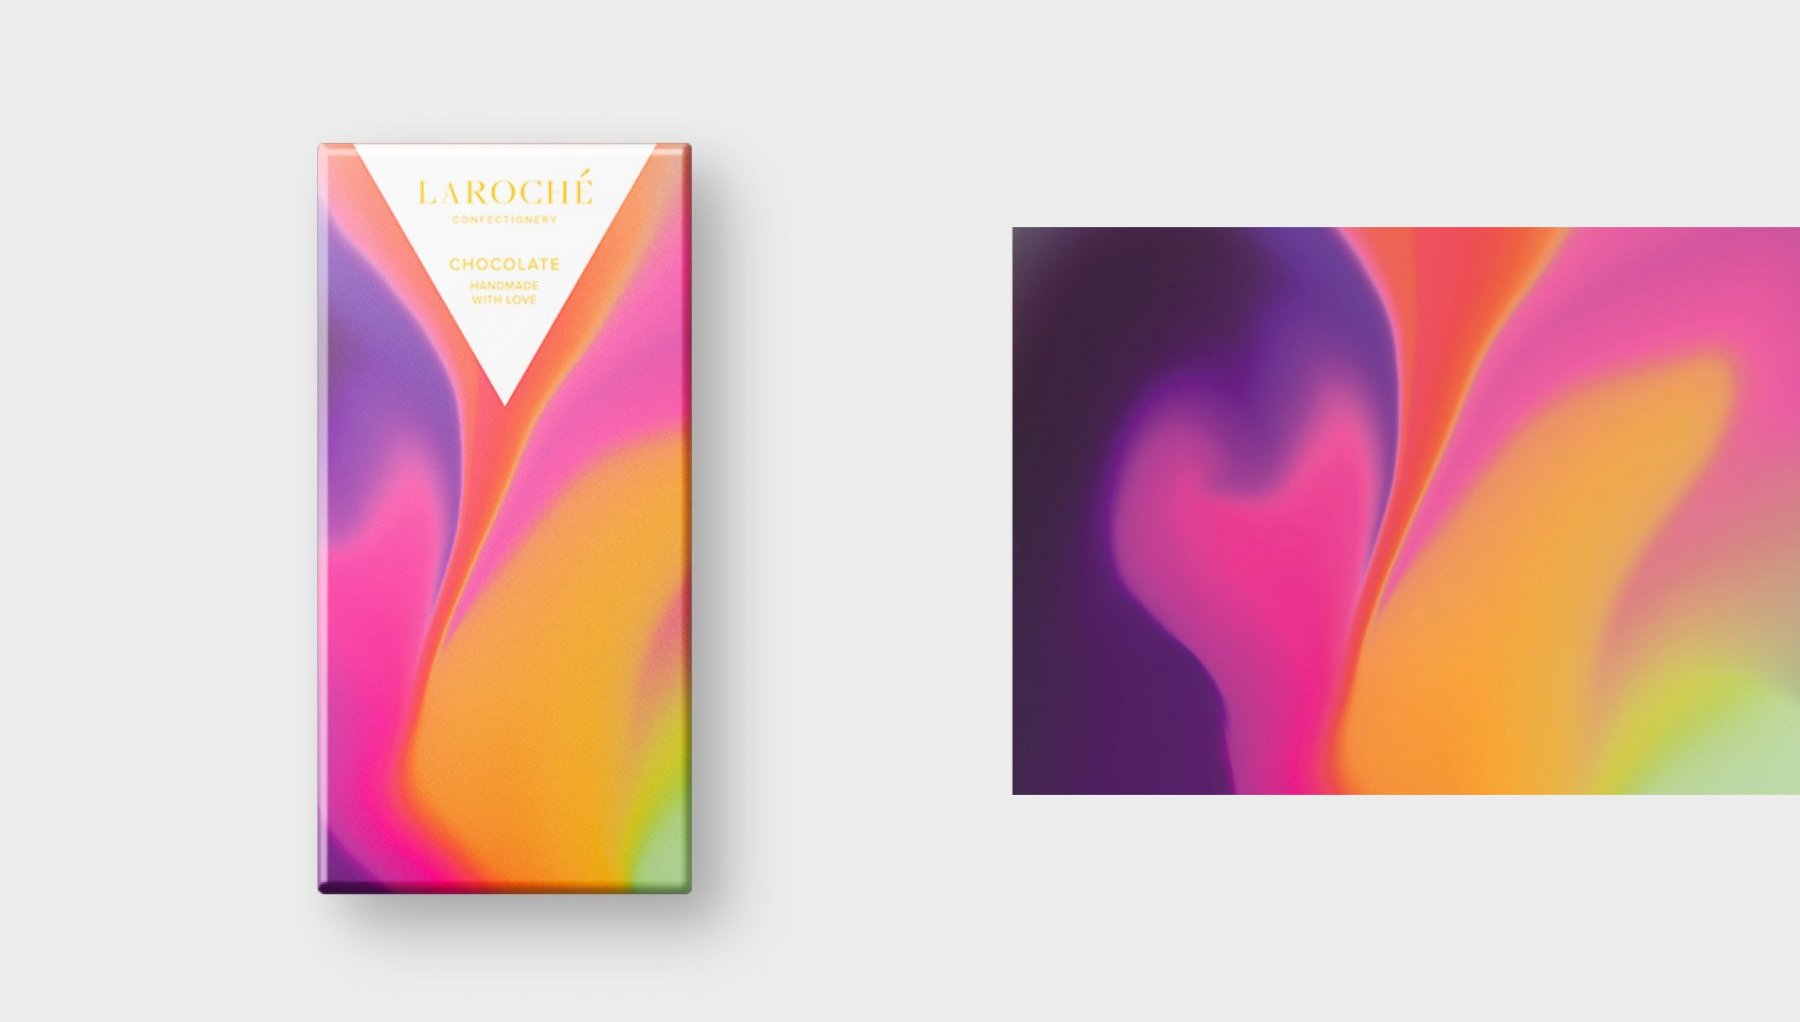 Laroche-Chocolate-Packaging-by-Martin-Naumann-03